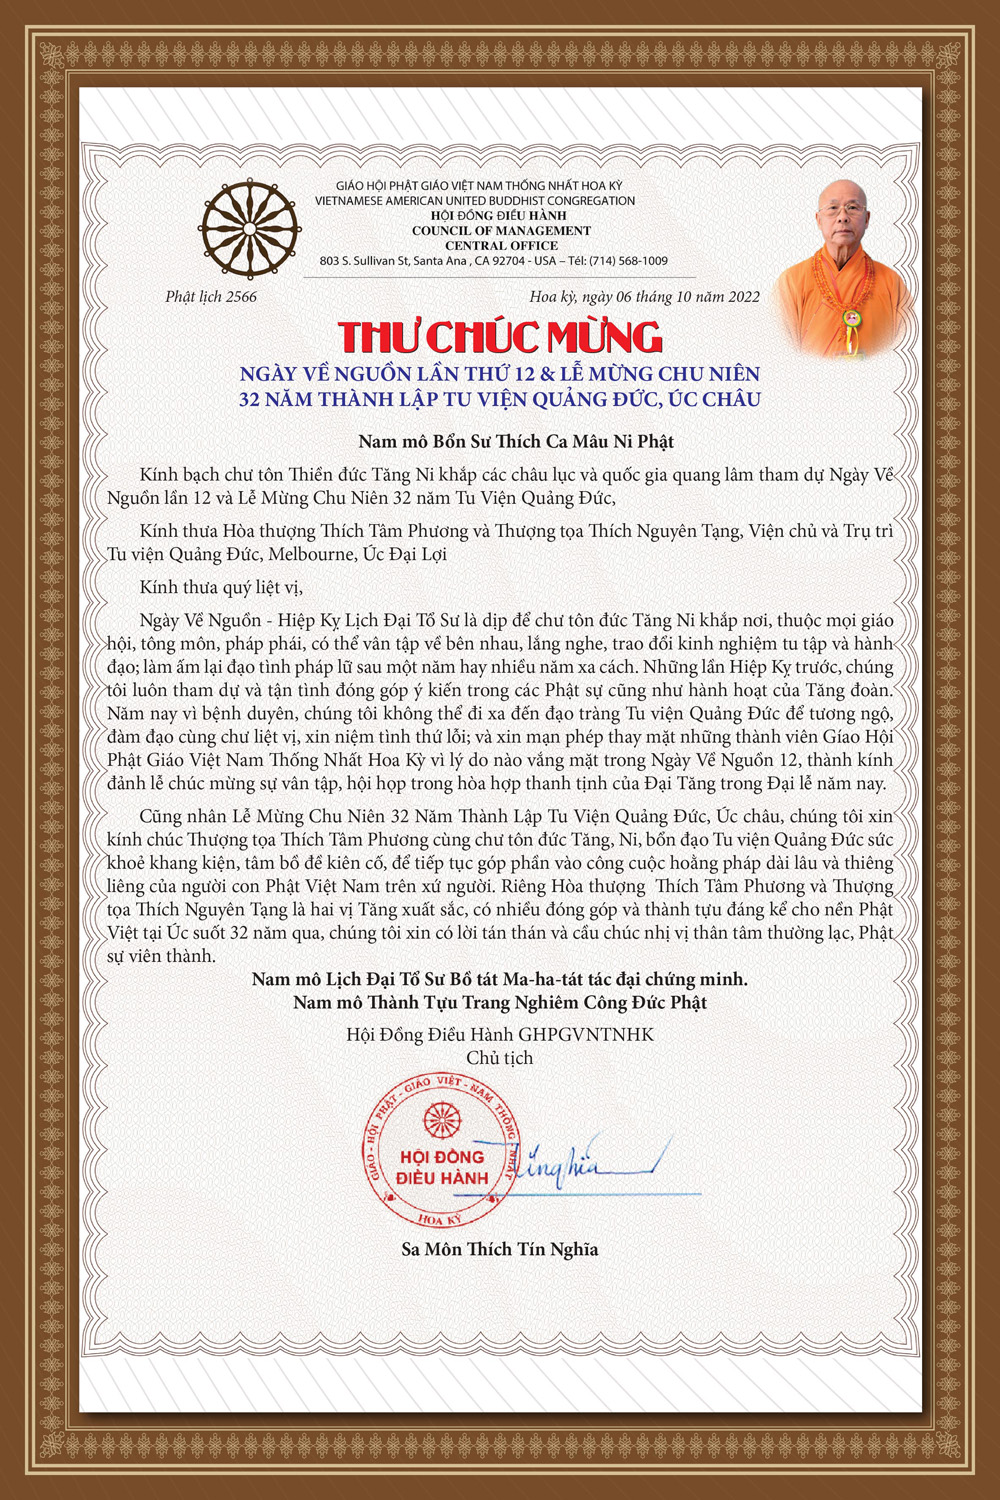 Thu Chuc Mung_HT Tin Nghia-2